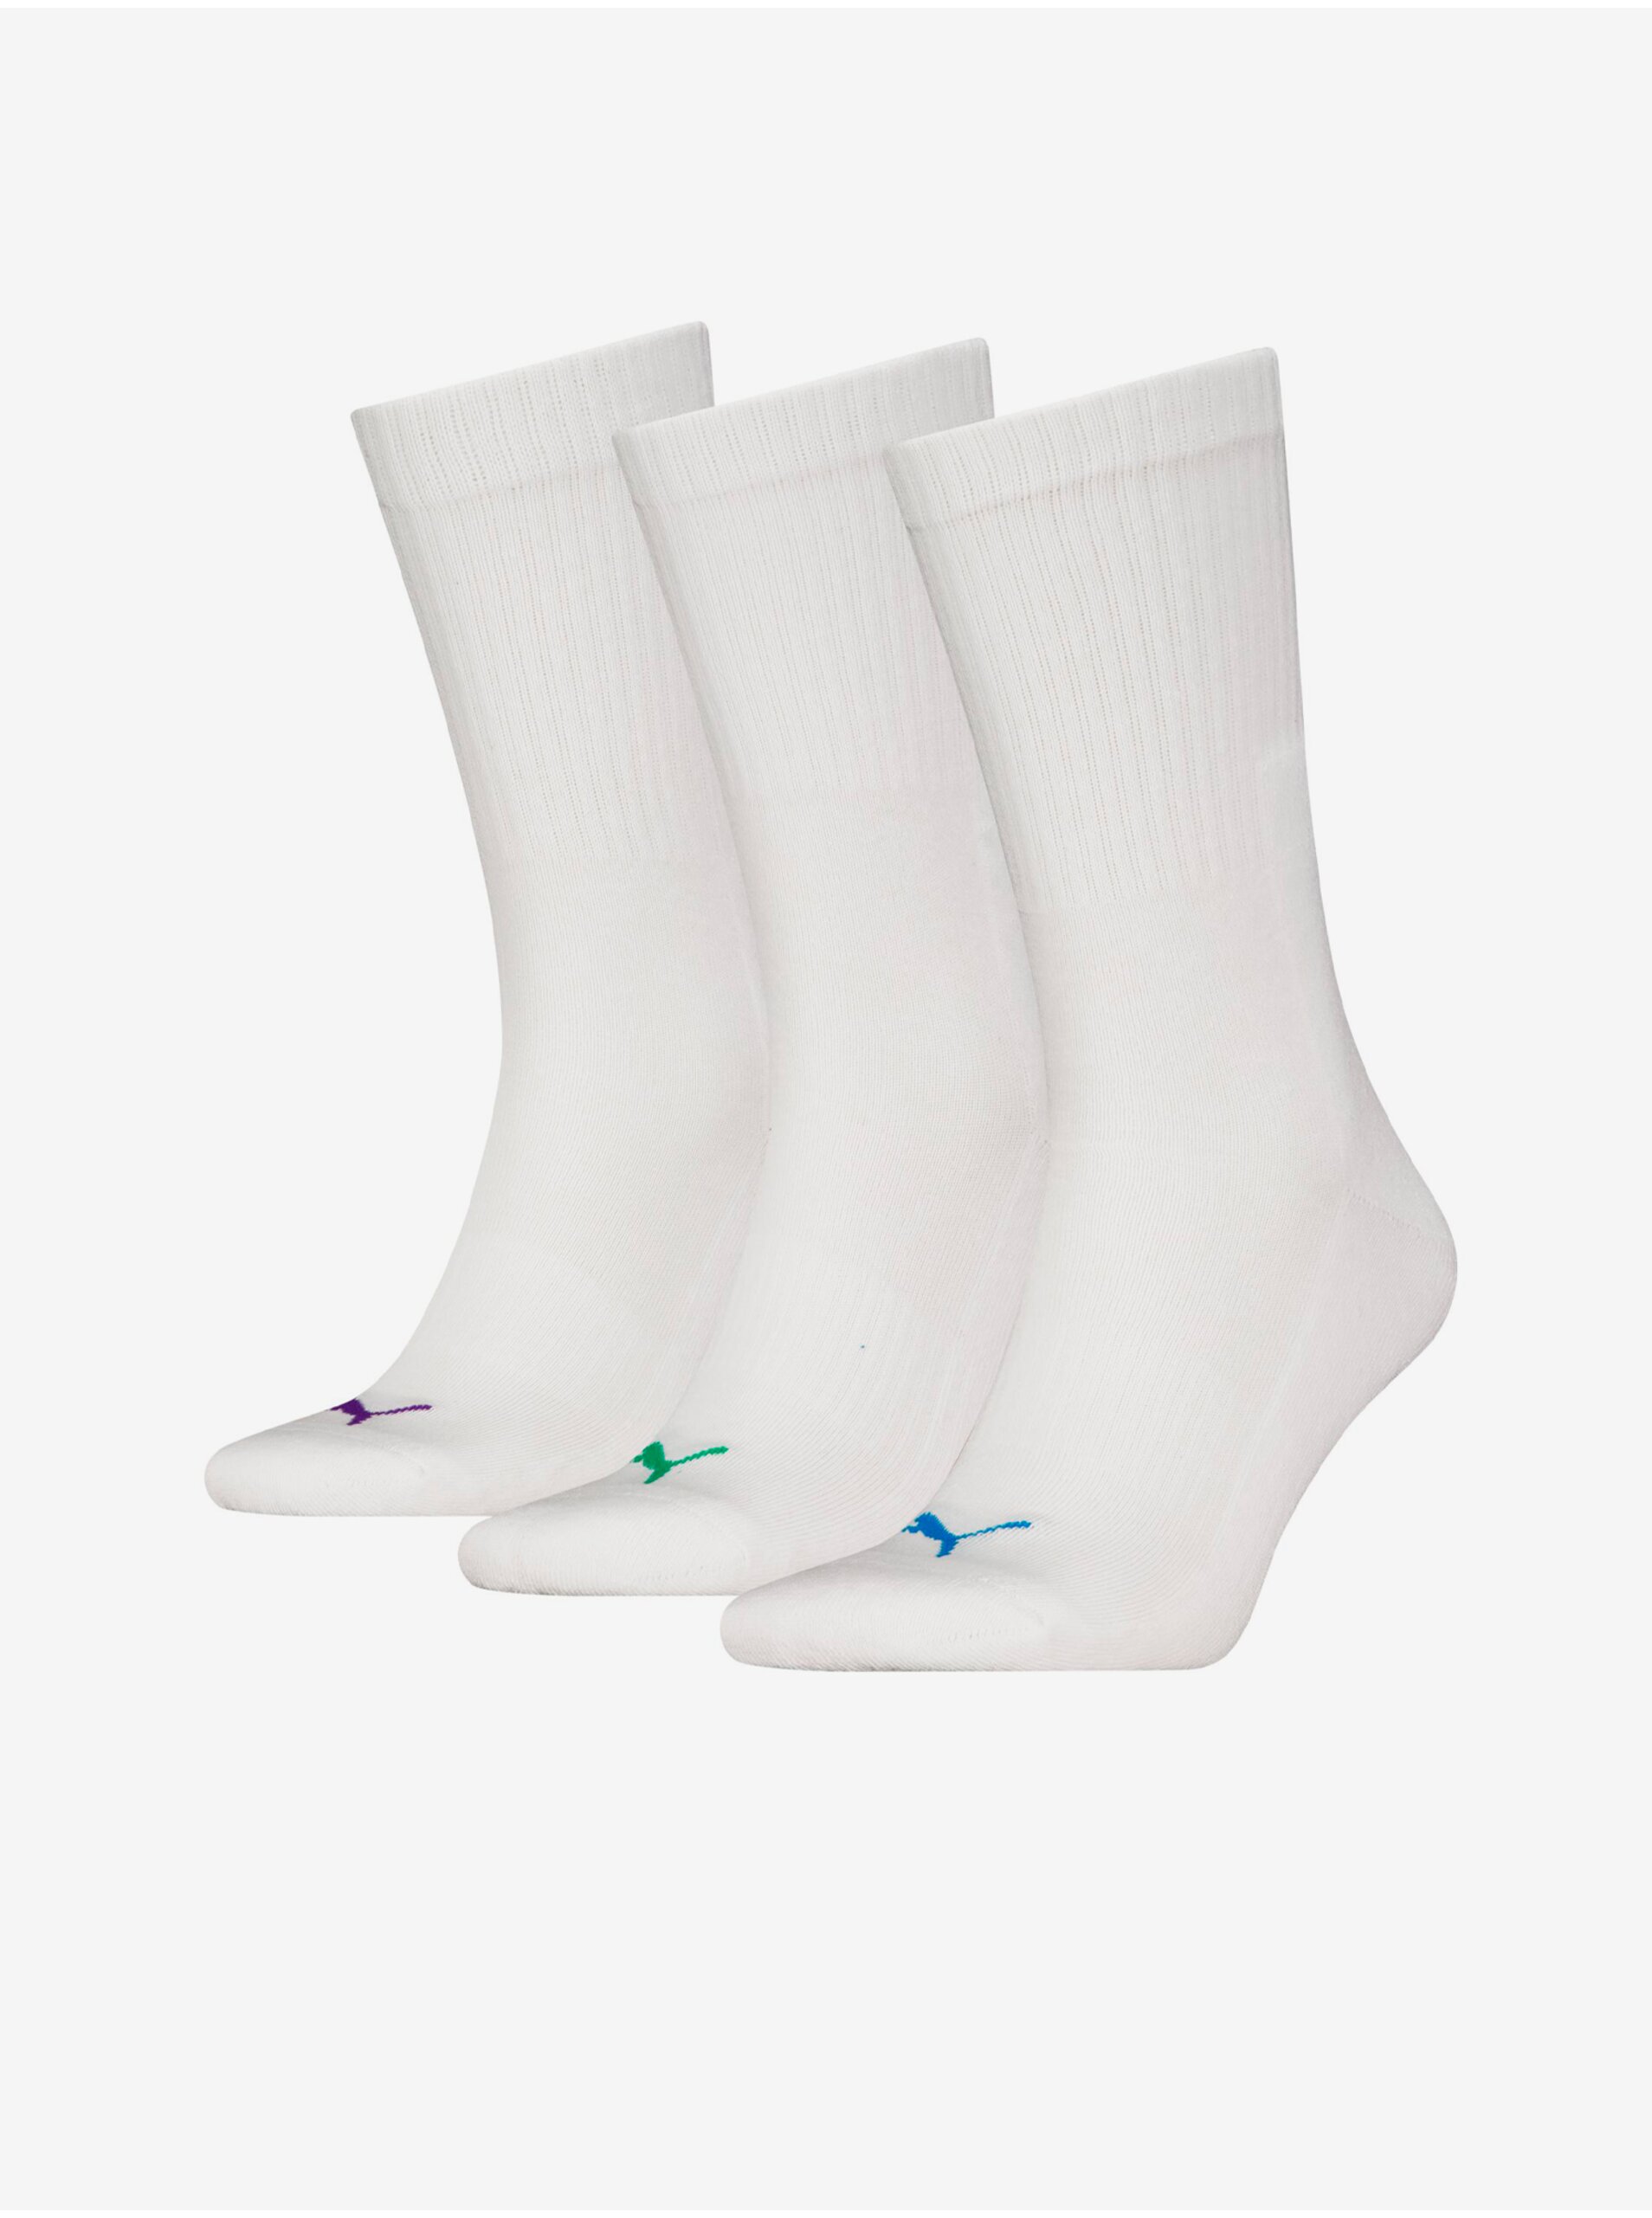 Set of three pairs of Puma New Generation socks - Men's